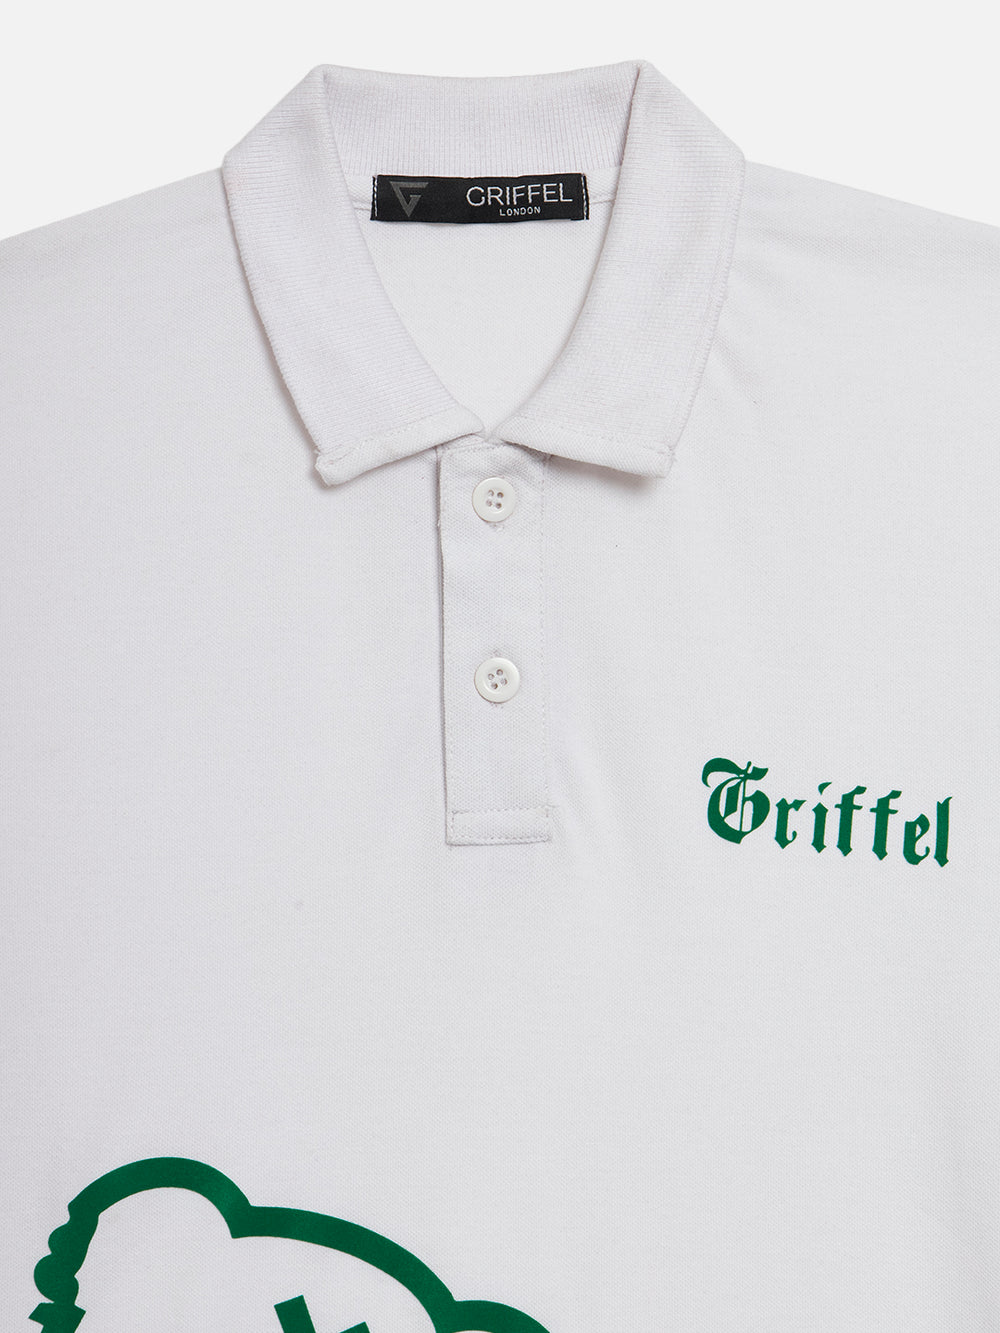 GRIFFEL Boys Kids White Printed Polo T-shirt - griffel